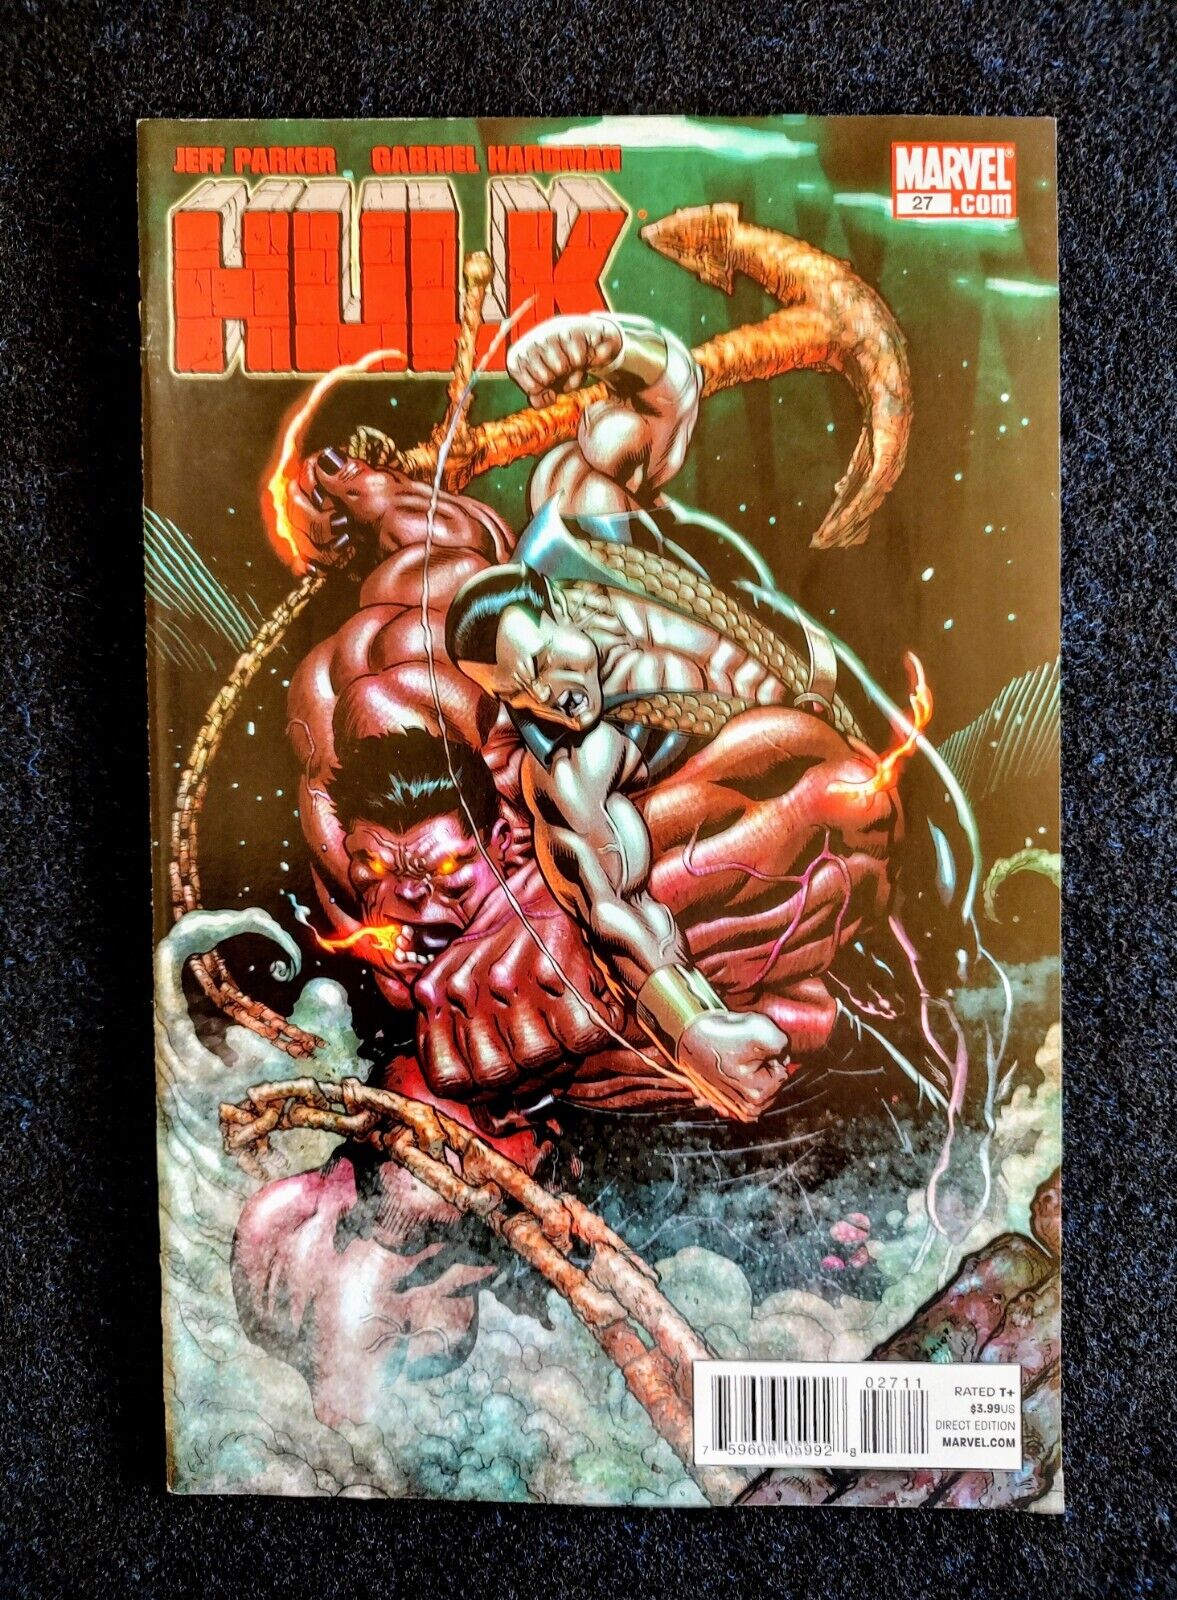 Hulk Issue #27 Marvel Comic Book MCU 2011 Jeff Parker Gabriel Hardman